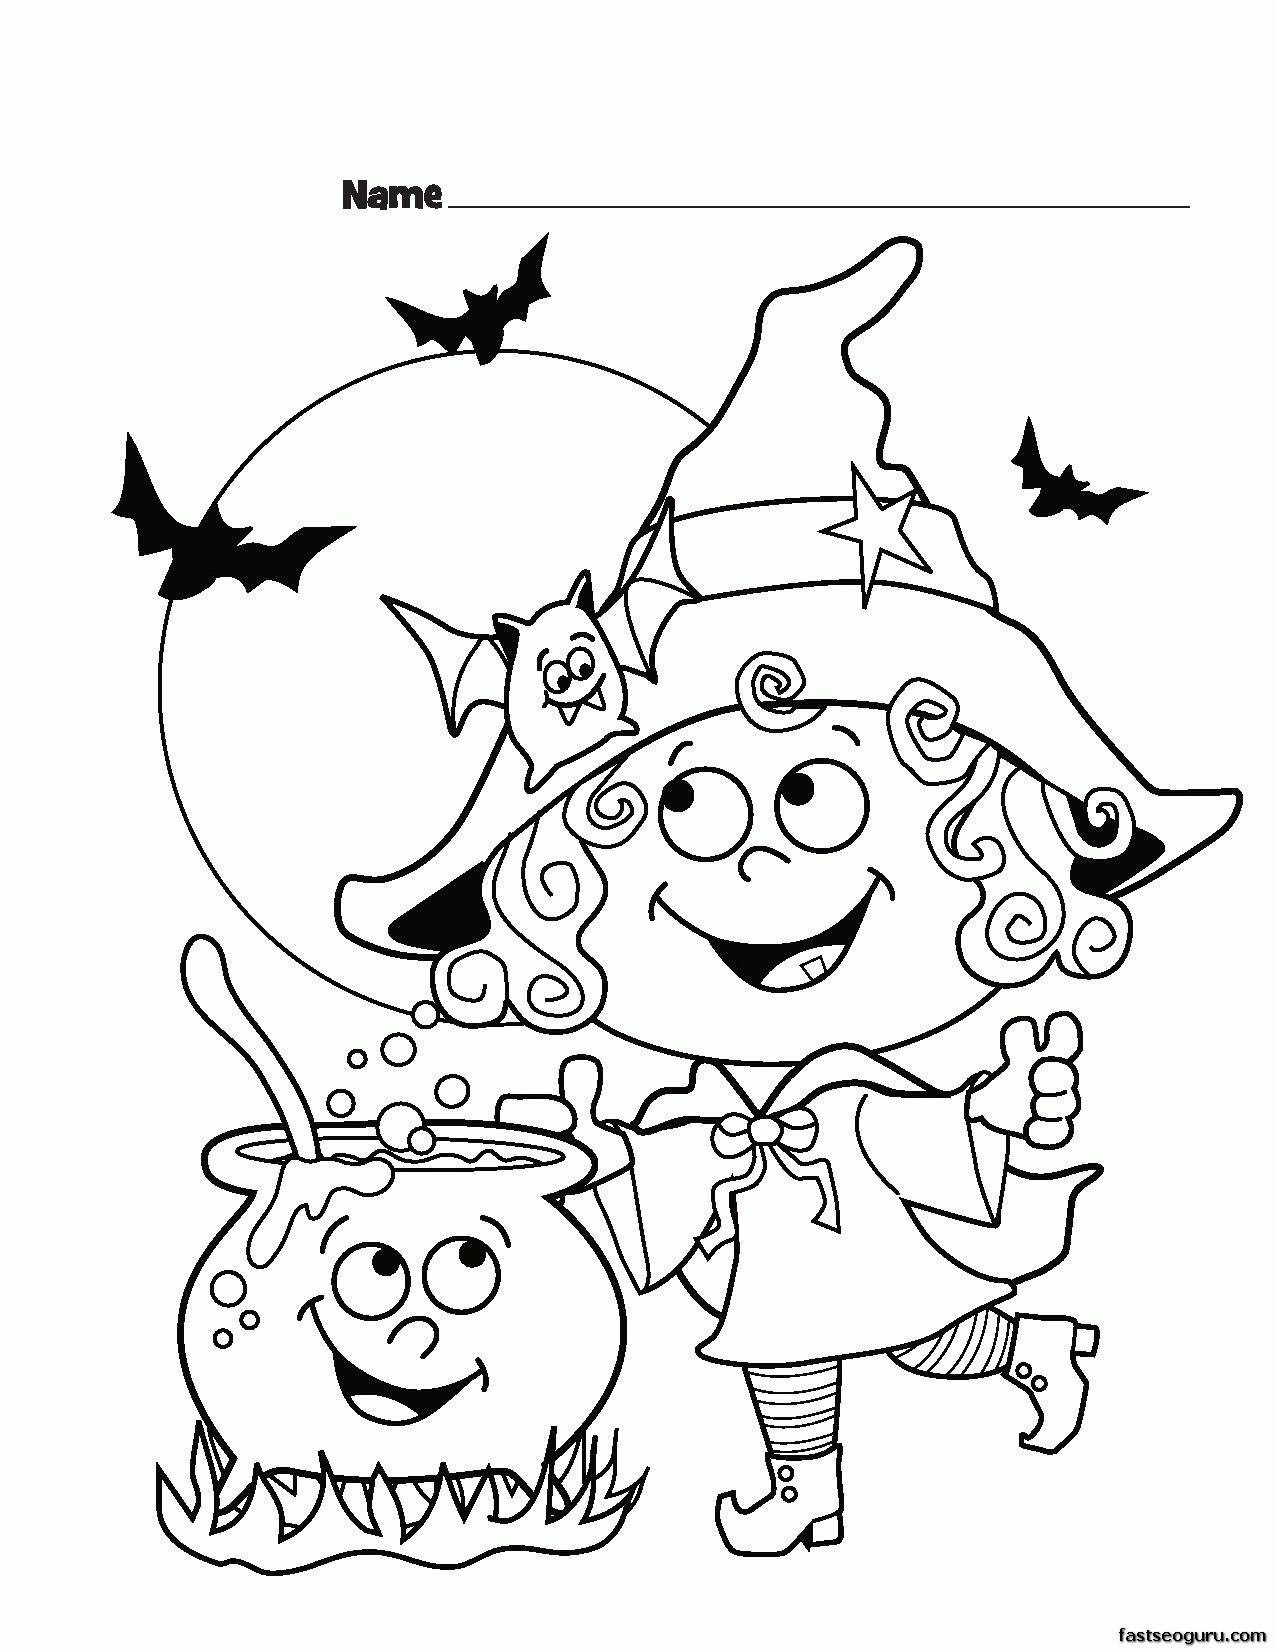 free-halloween-coloring-pages-preschoolers-download-free-halloween